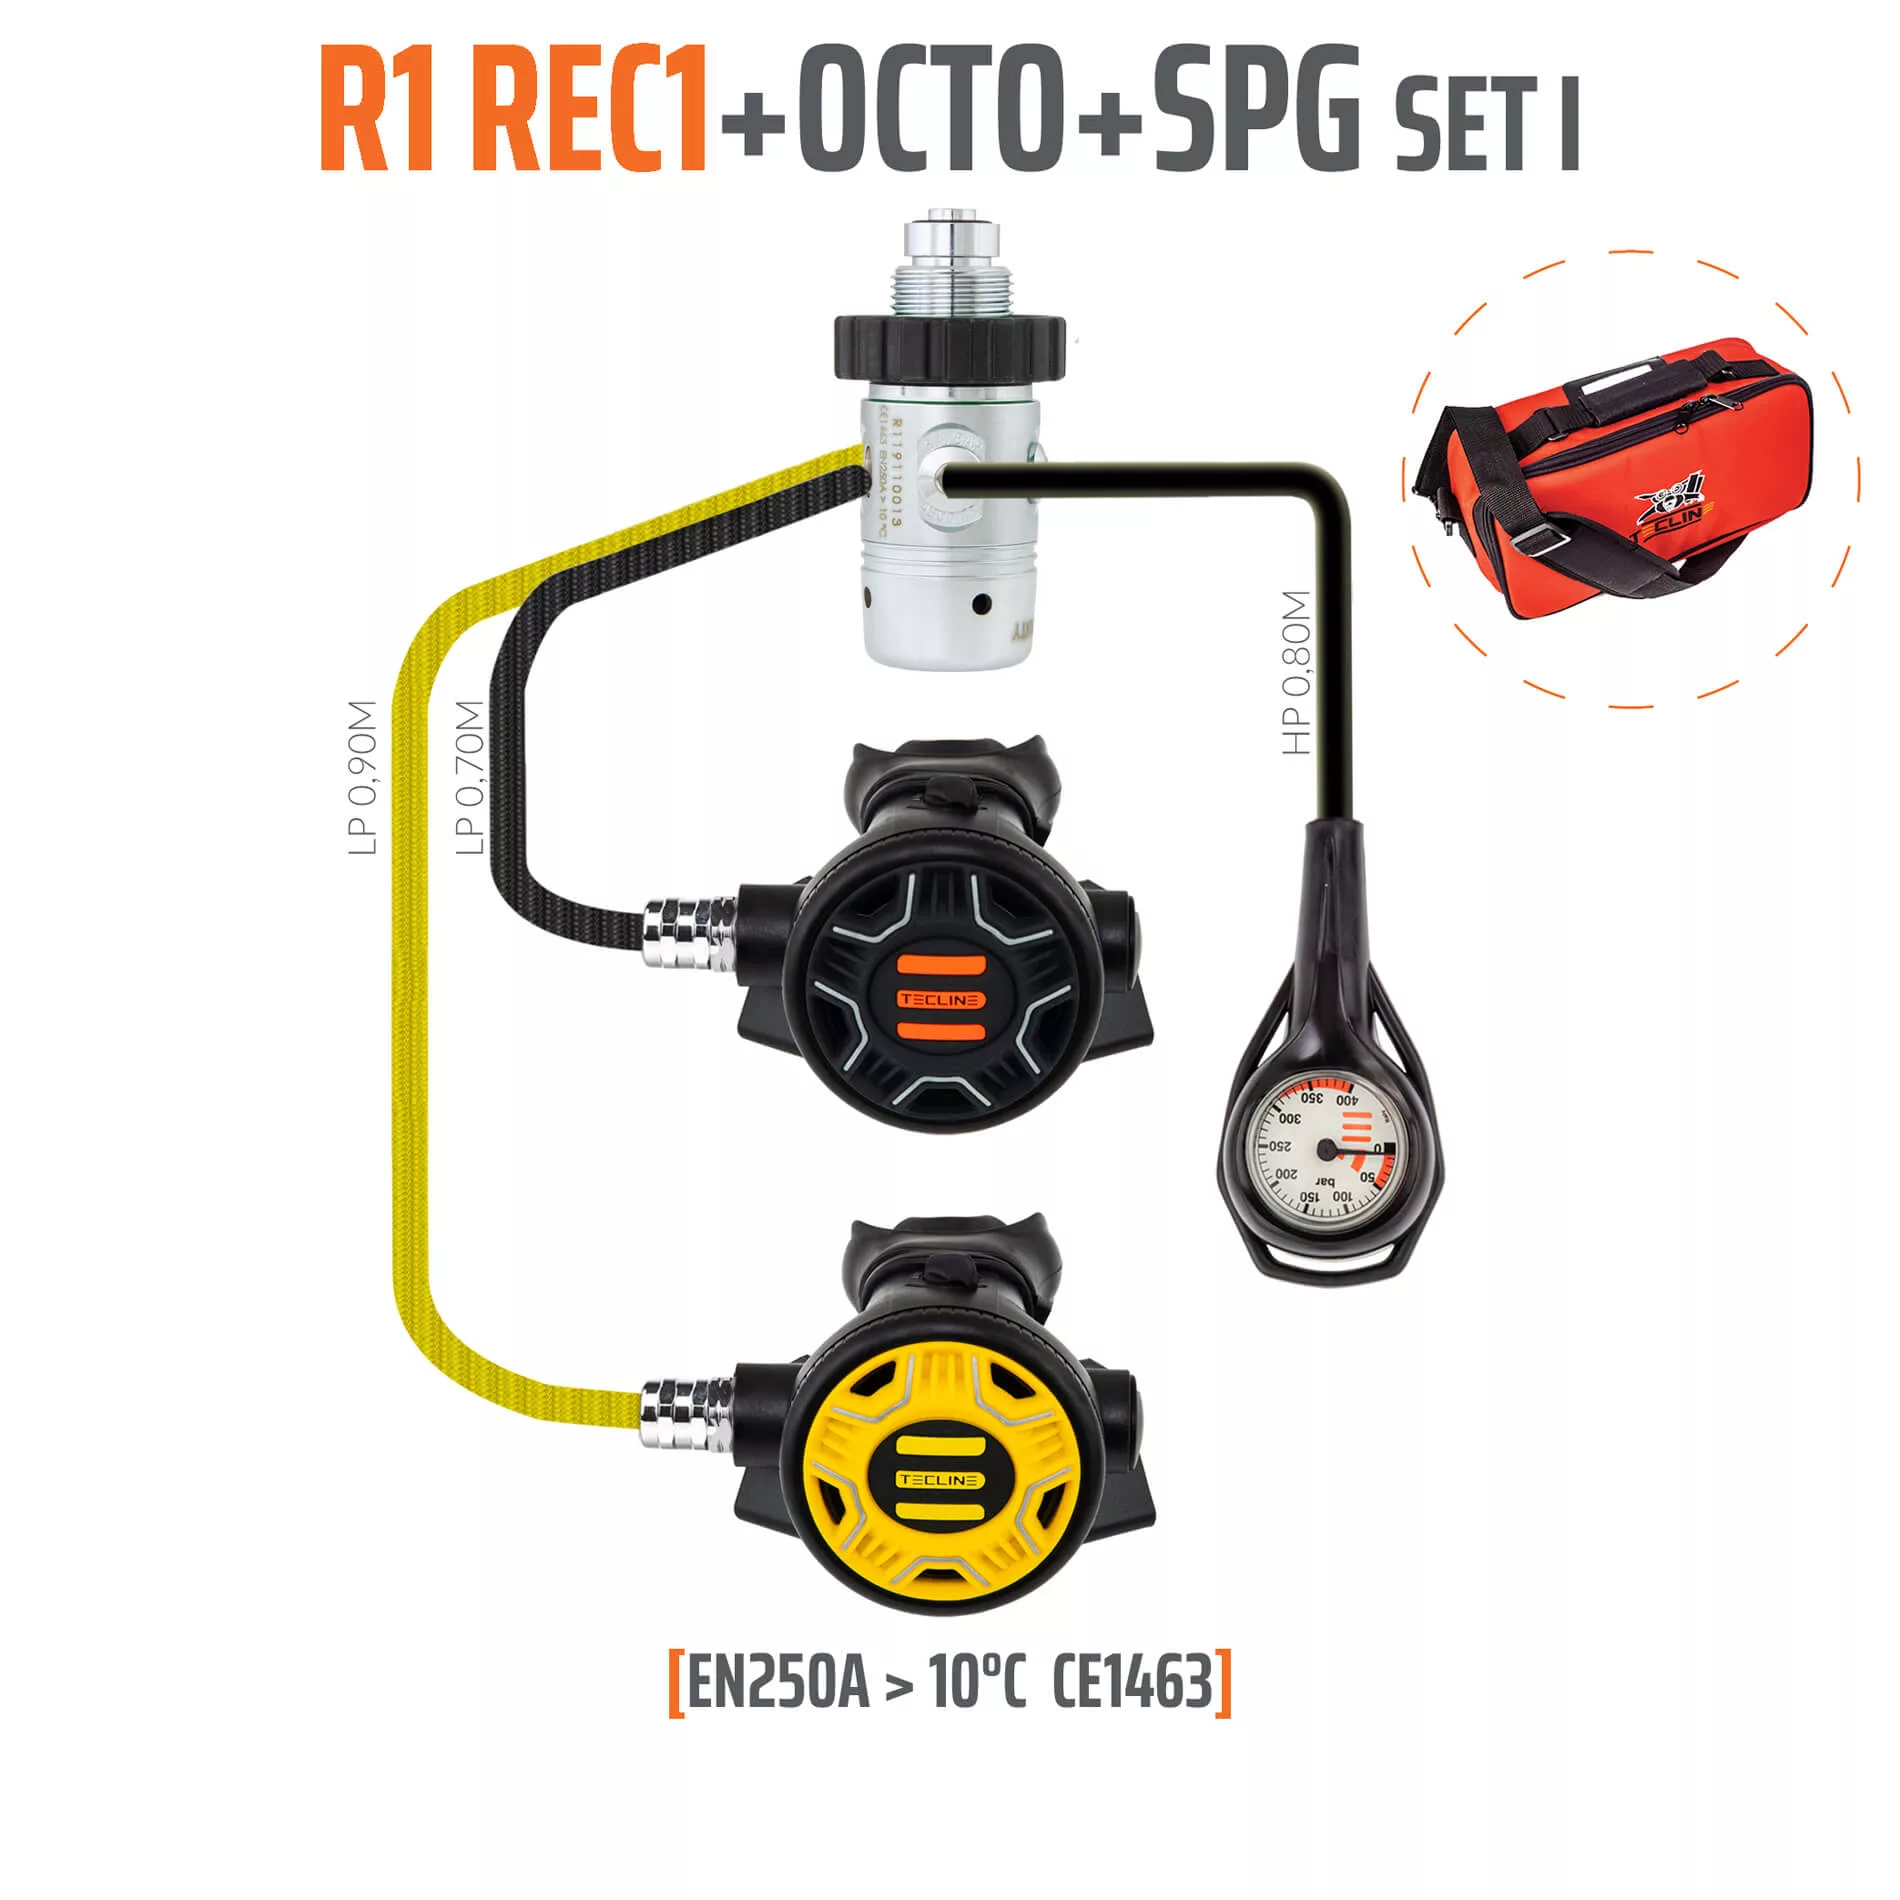 Nemo Diving Regulator R1 Rec1 Set I With Octo And Spg - En250a